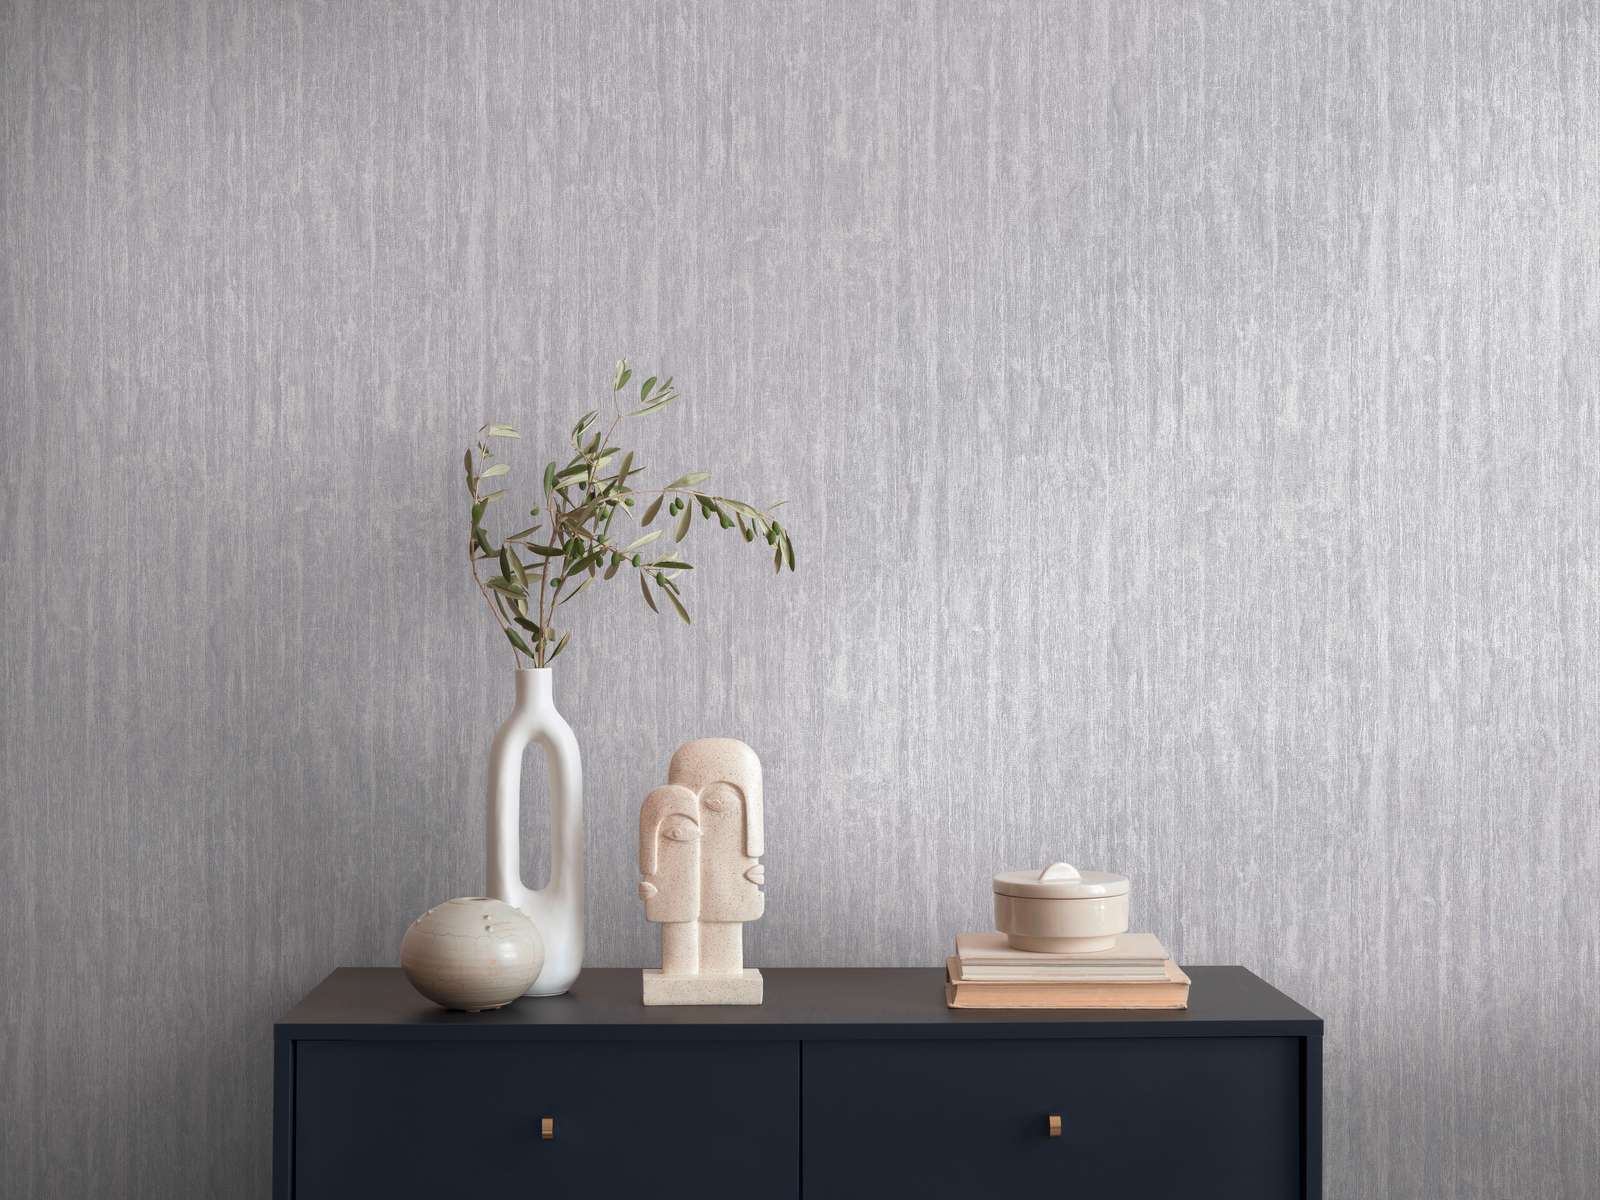             Slightly glossy wallpaper with line pattern - grey, silver, metallic
        